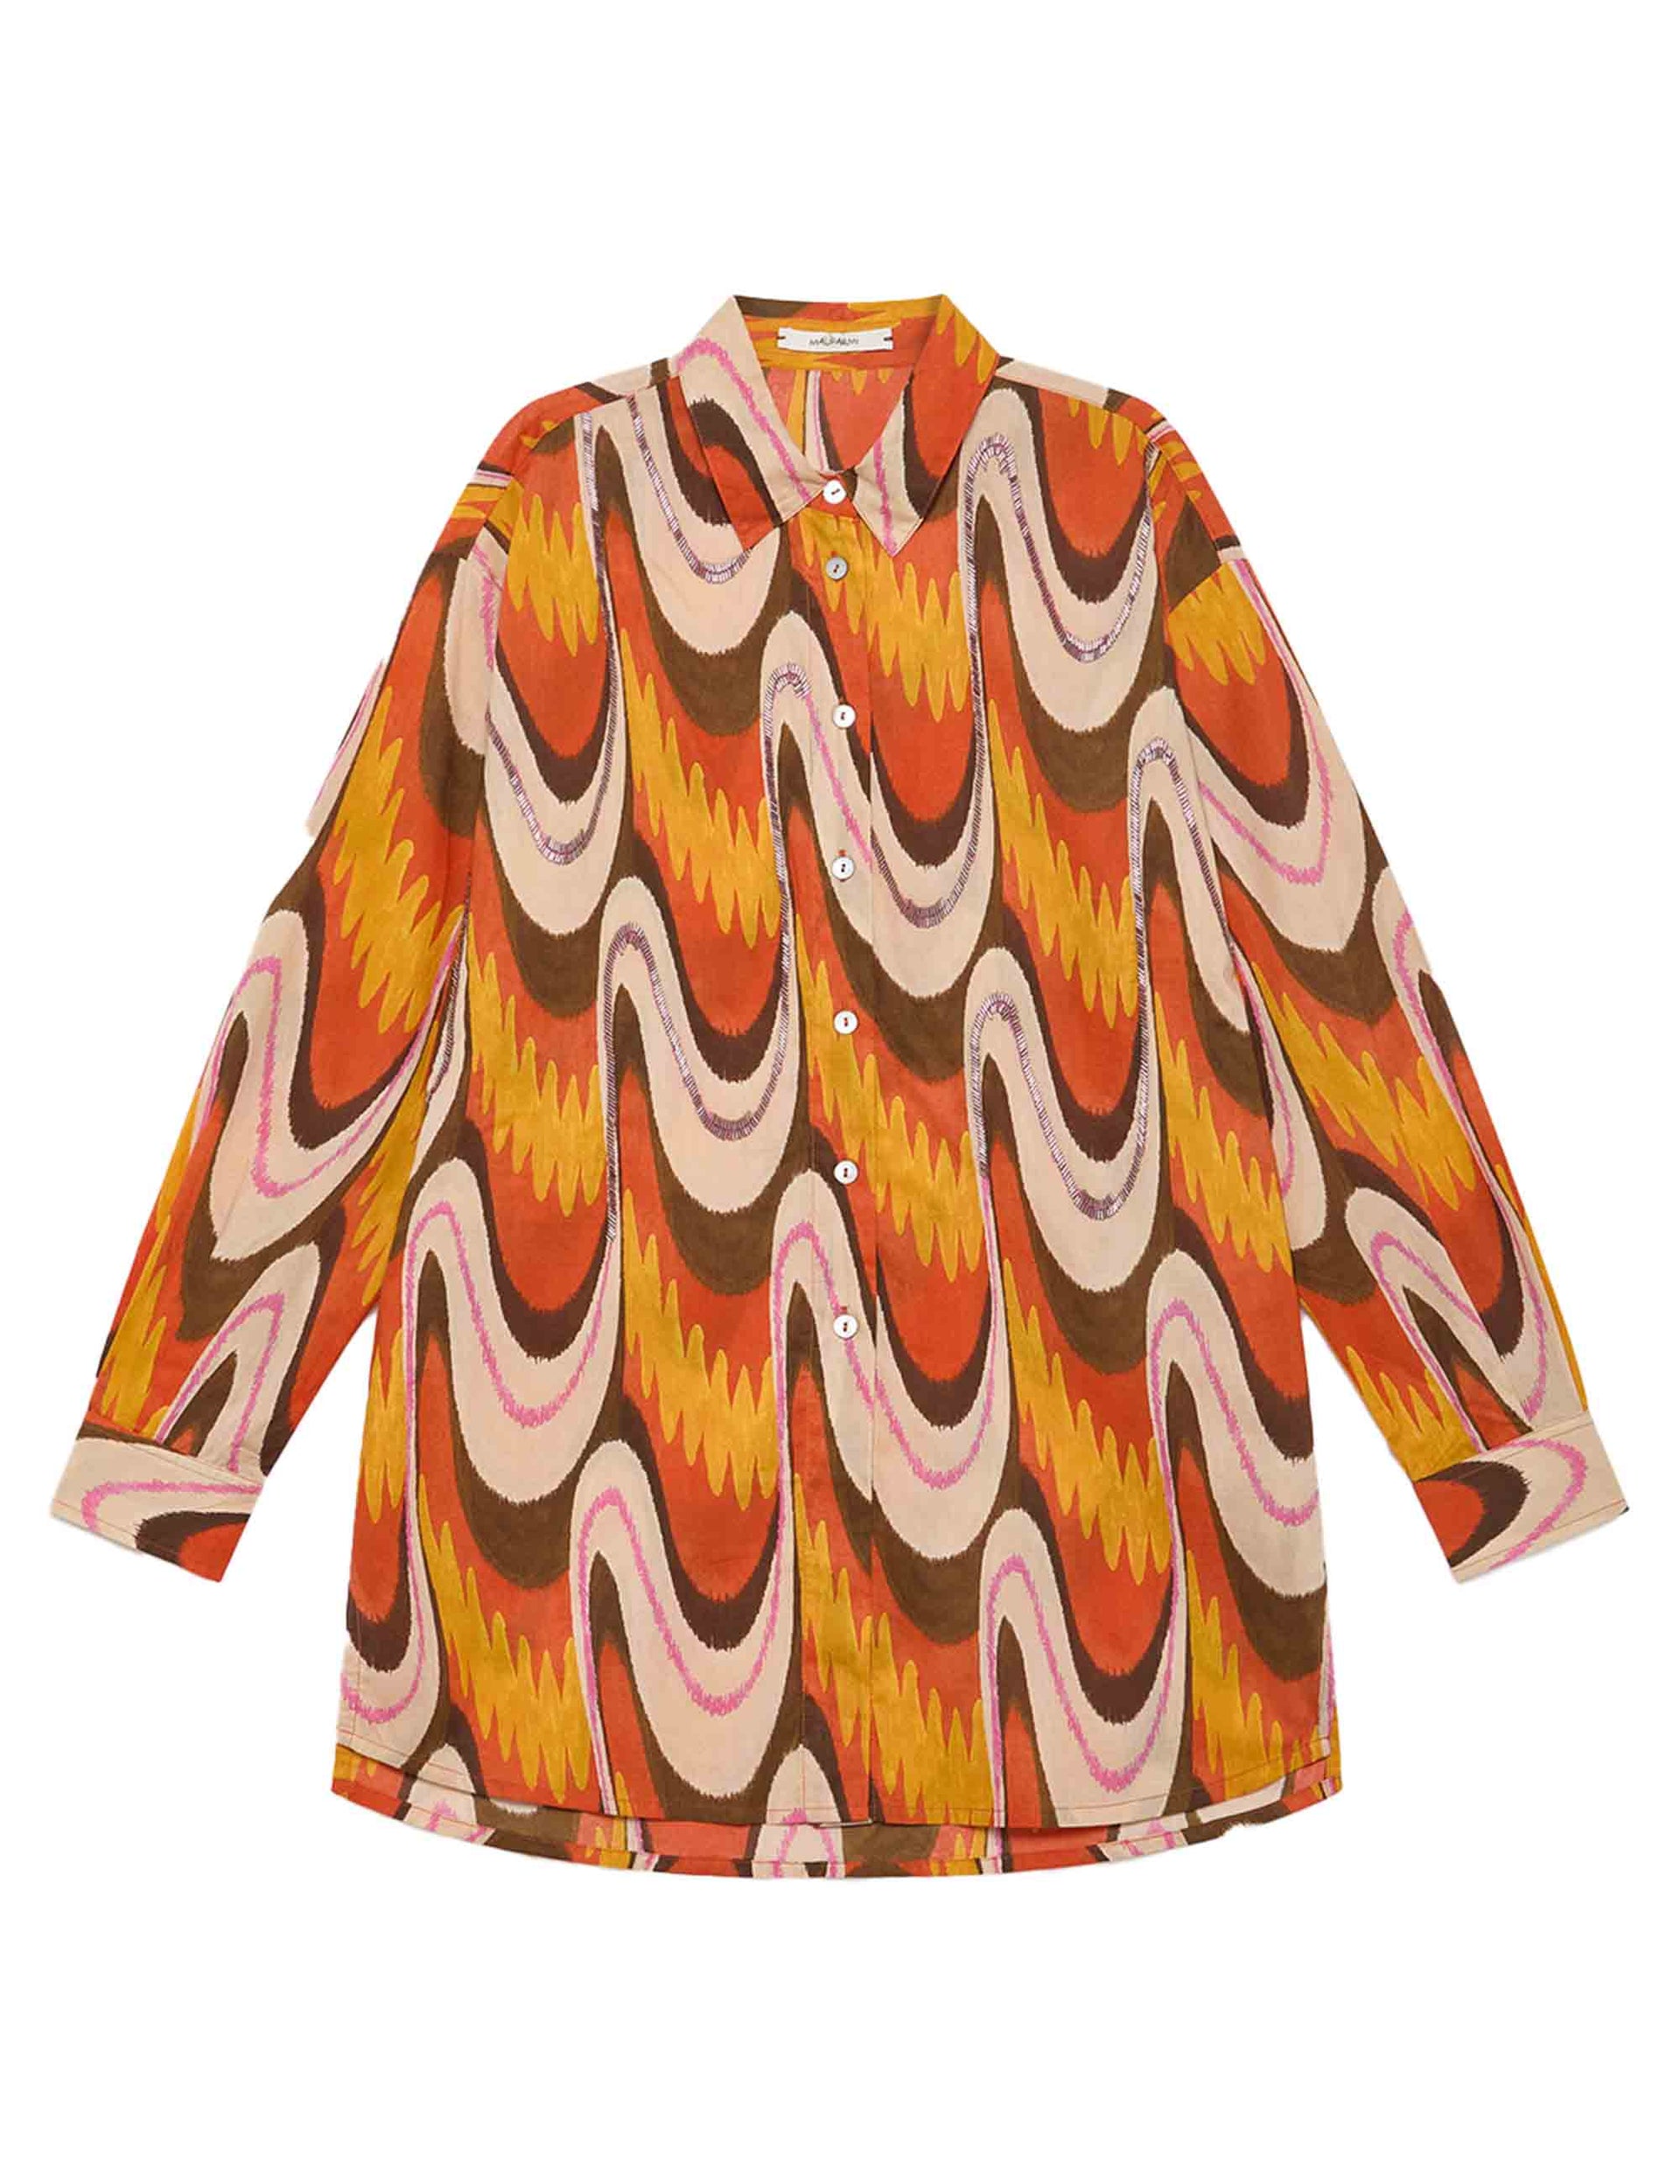 Ikat Wave Muslin women's shirts in orange cotton